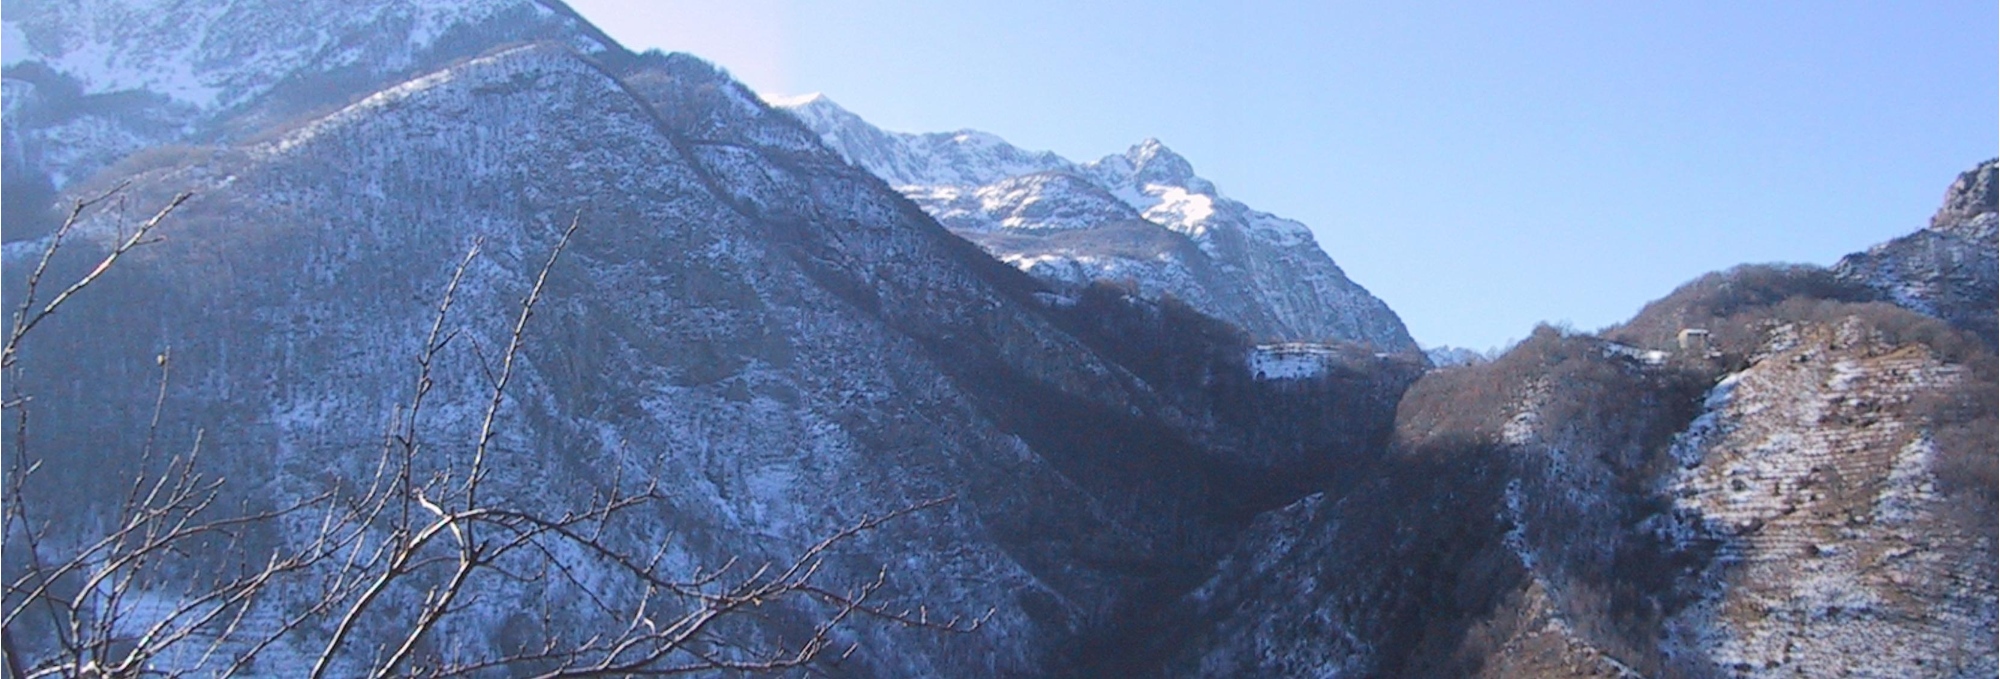 Garfagnana, los Alpes Apuanos